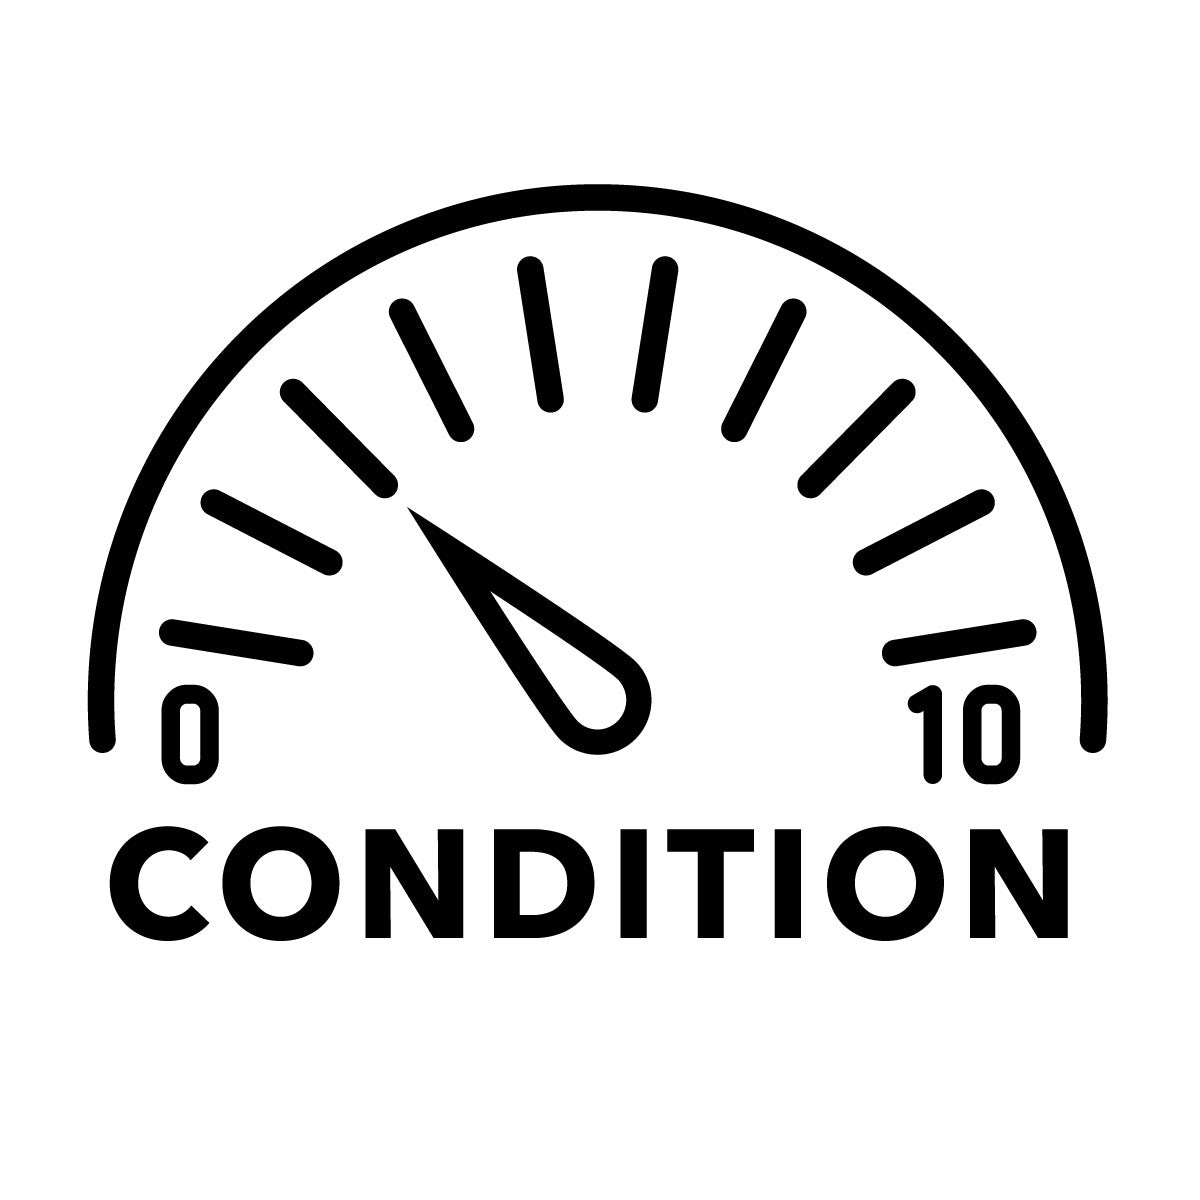 condition-icon-3